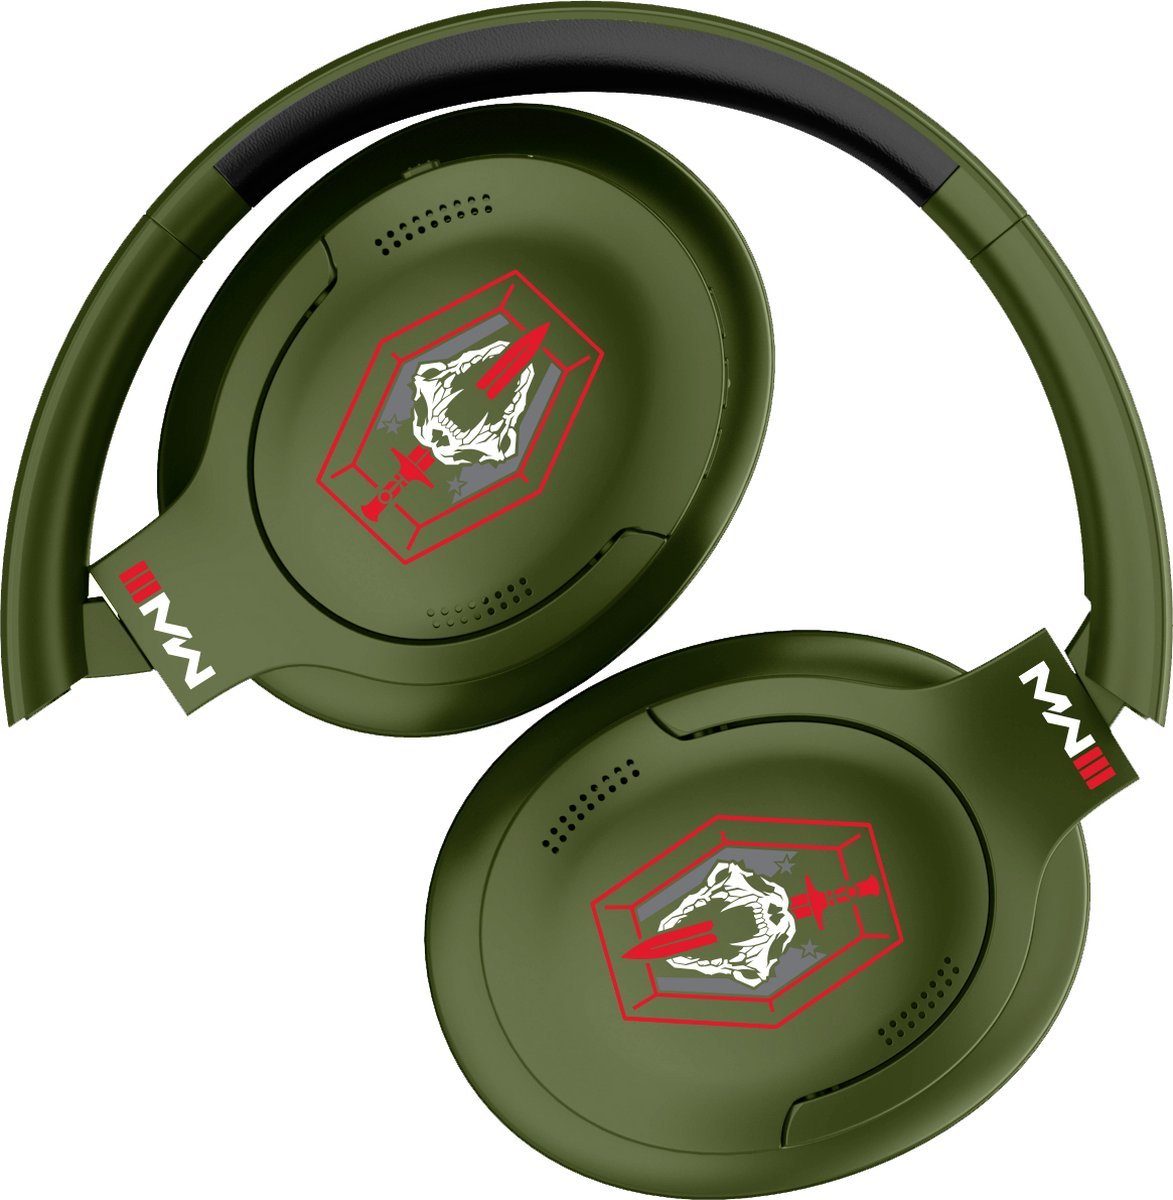 ANC-Bluetooth-Kopfhörer of 30 Spielzeit) OTL Call (Bluetooth, – – Mikrofon – Stunden Bluetooth-Kopfhörer Modern Duty Warfare 3